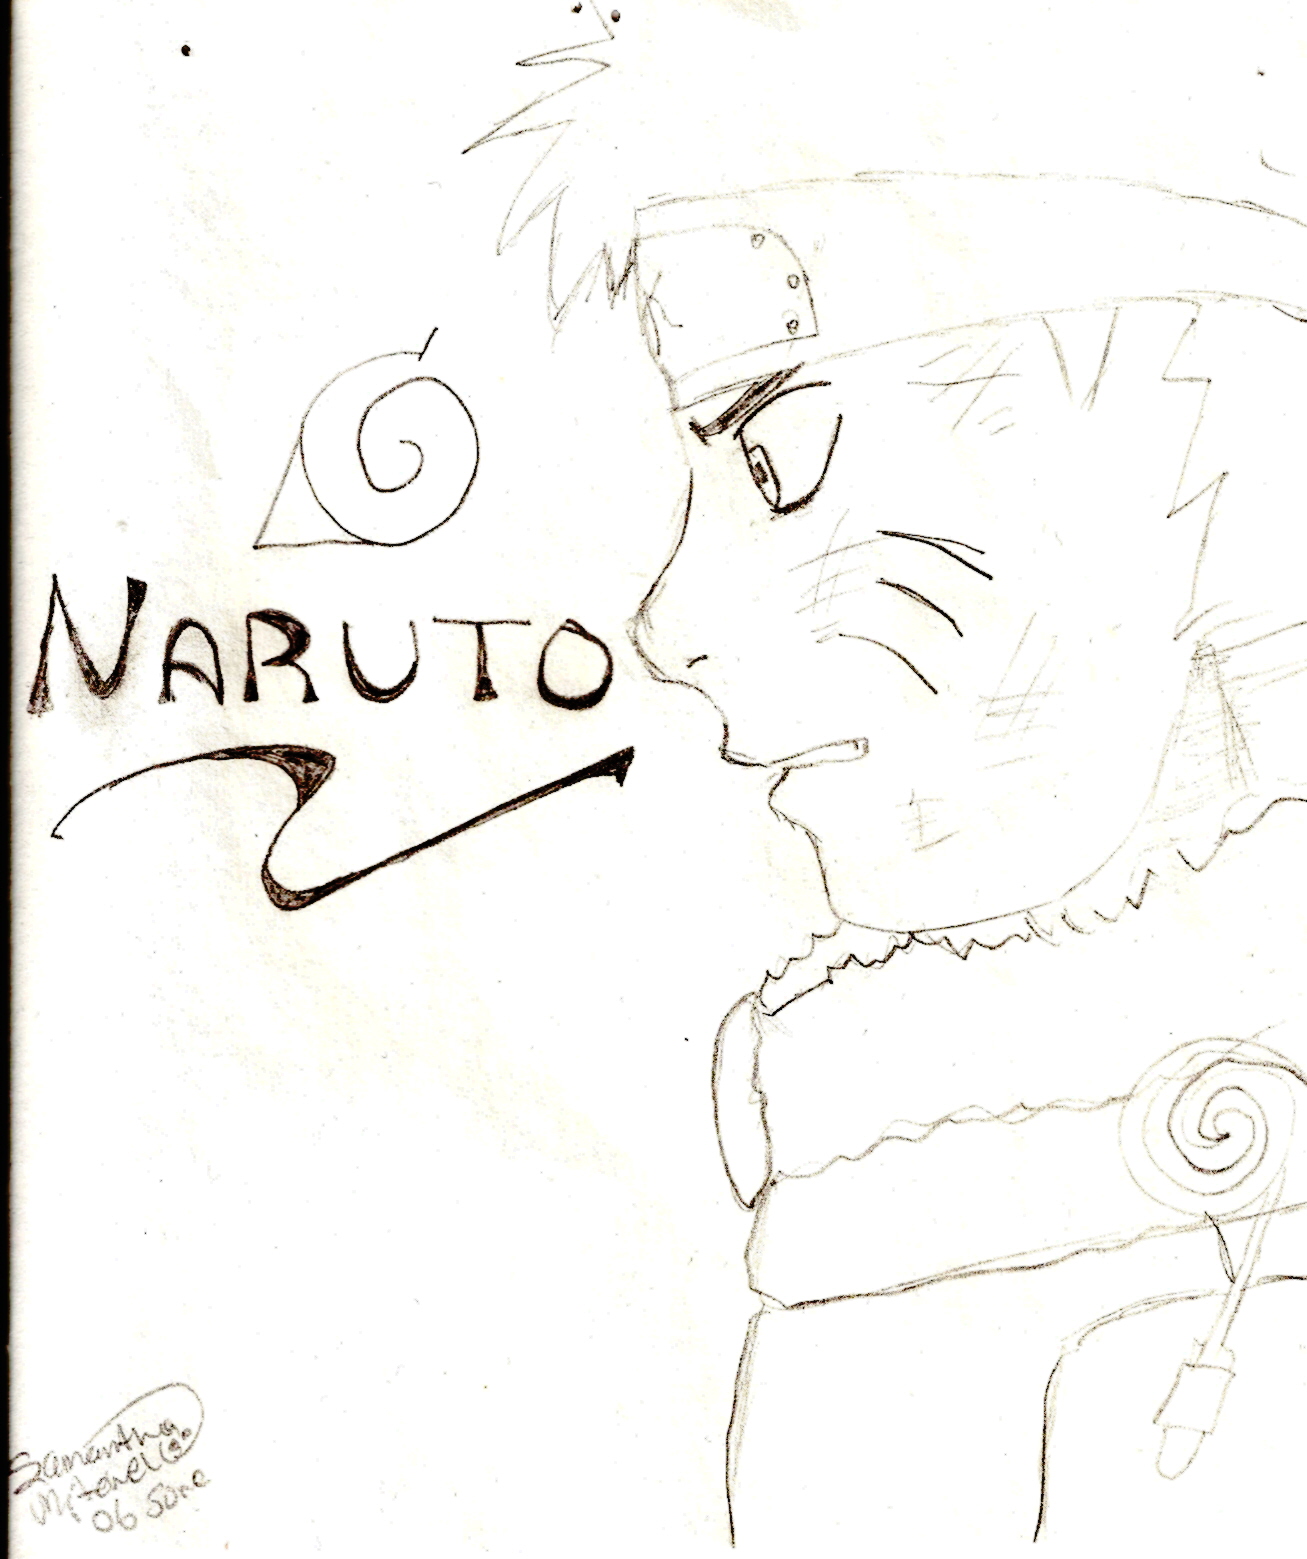 Naruto in battle by Sammiy303